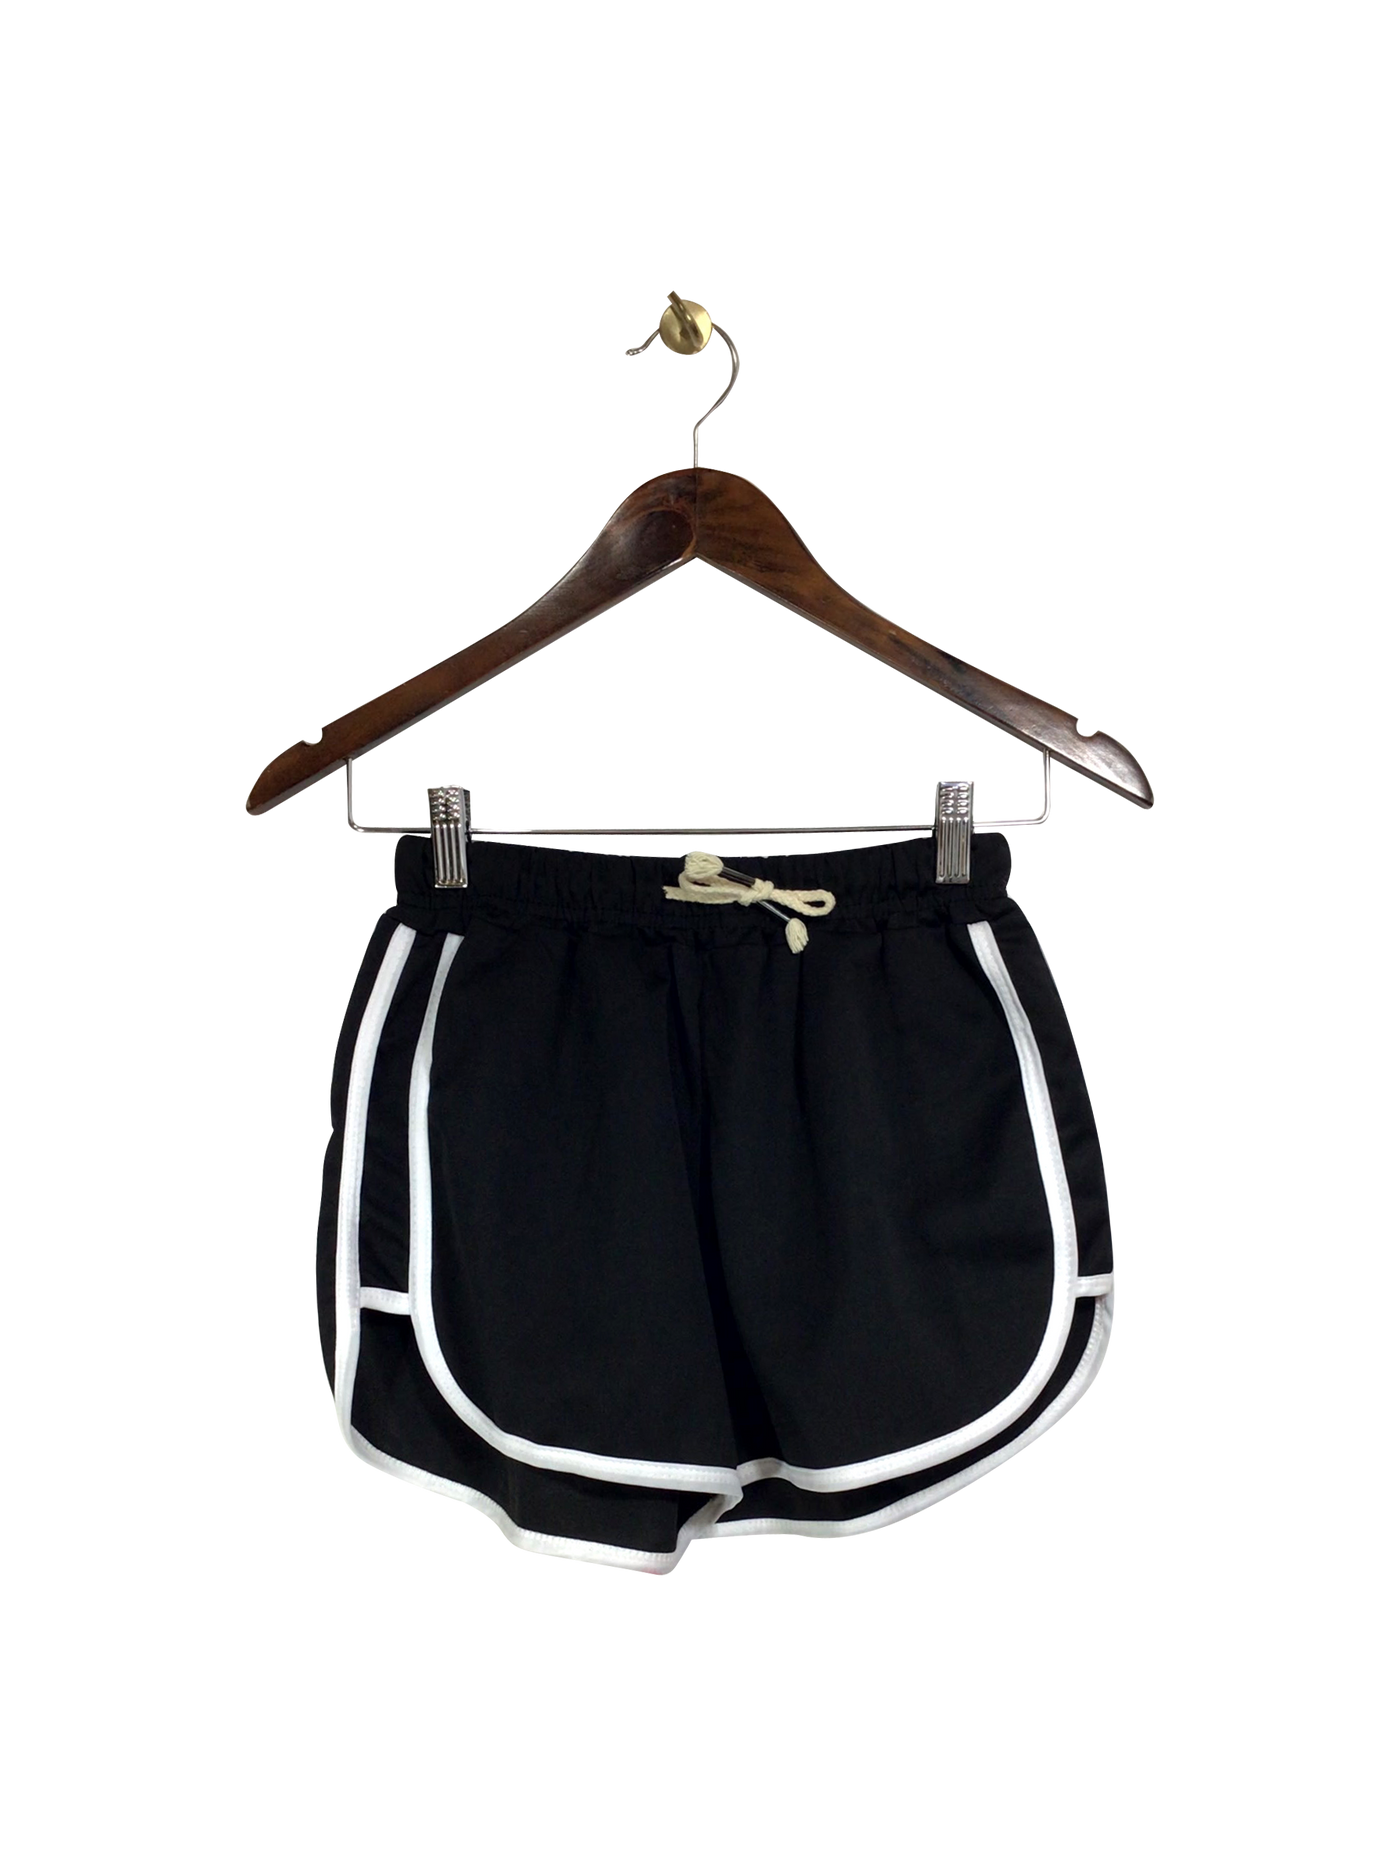 UNBRANDED Regular fit Activewear Short in Black - Size XS | 9.99 $ KOOP